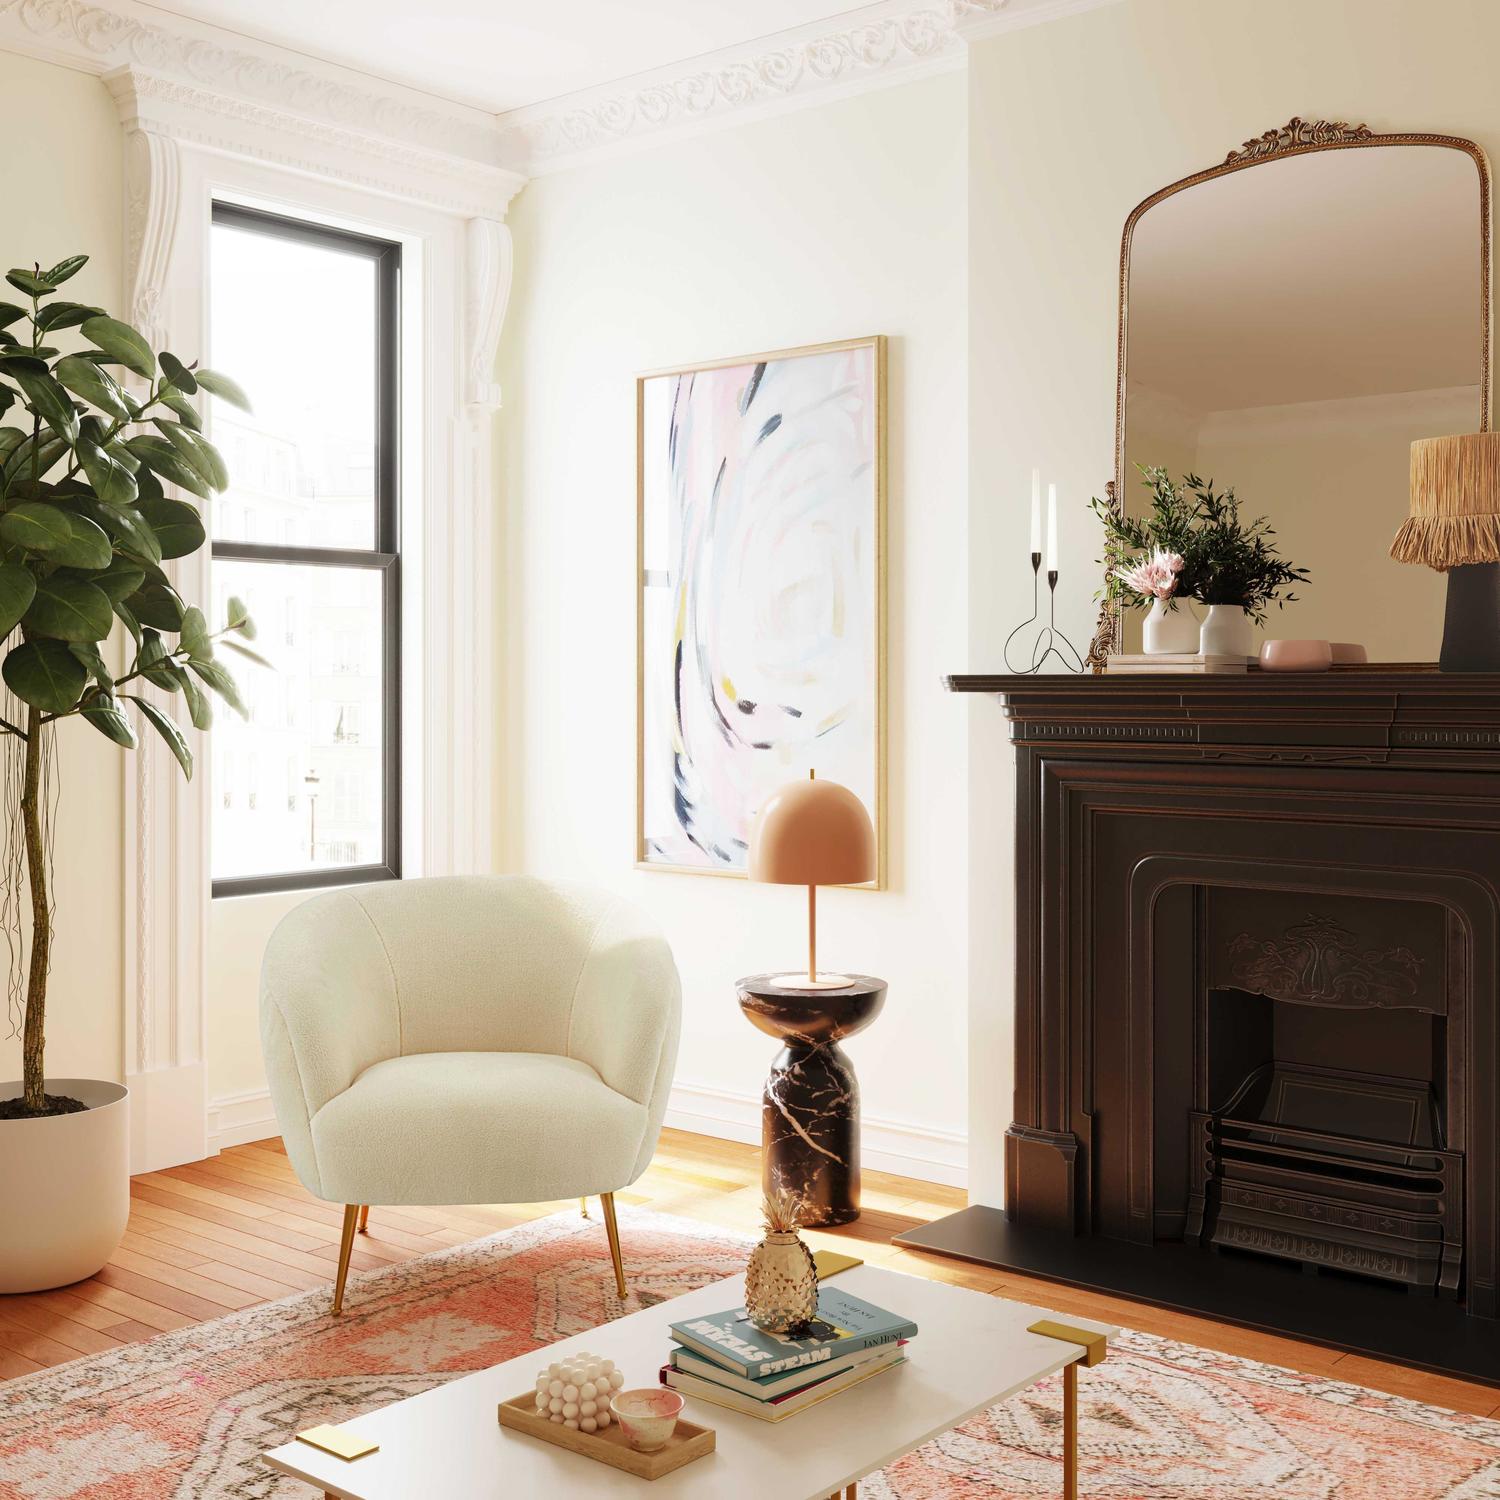 eames lounge ottoman Contemporary Design Furniture Accent Chairs Cream